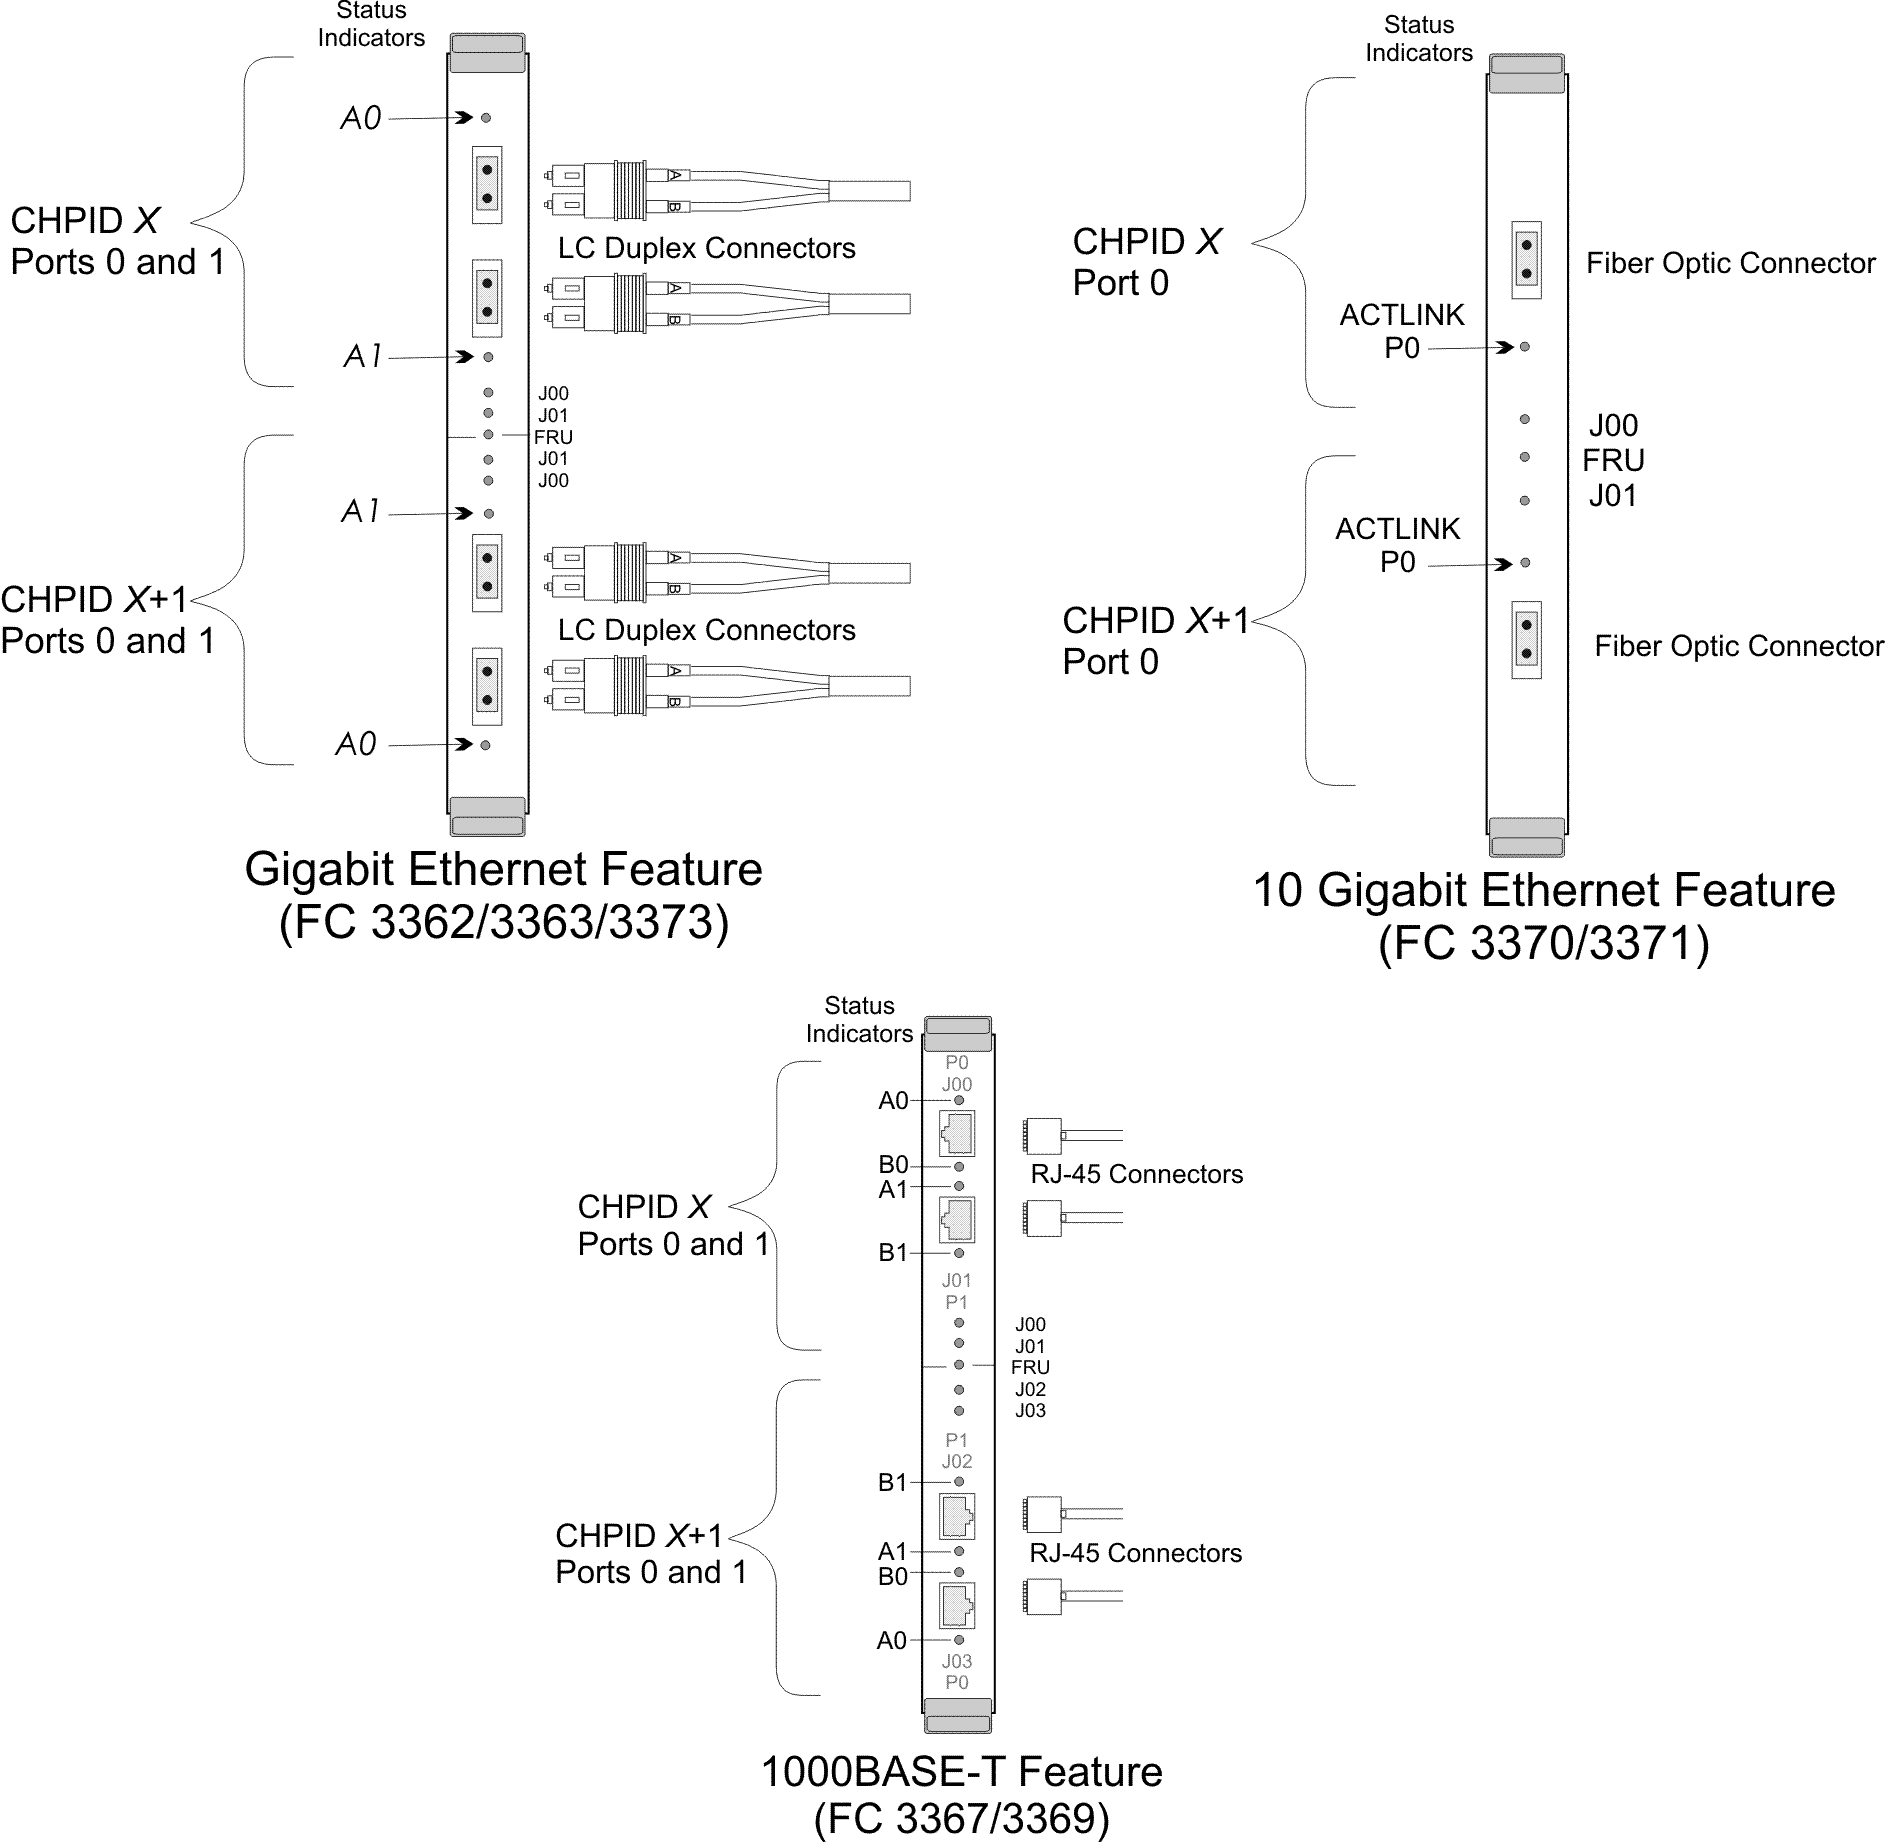 OSA-Express3 connectors and status indicators